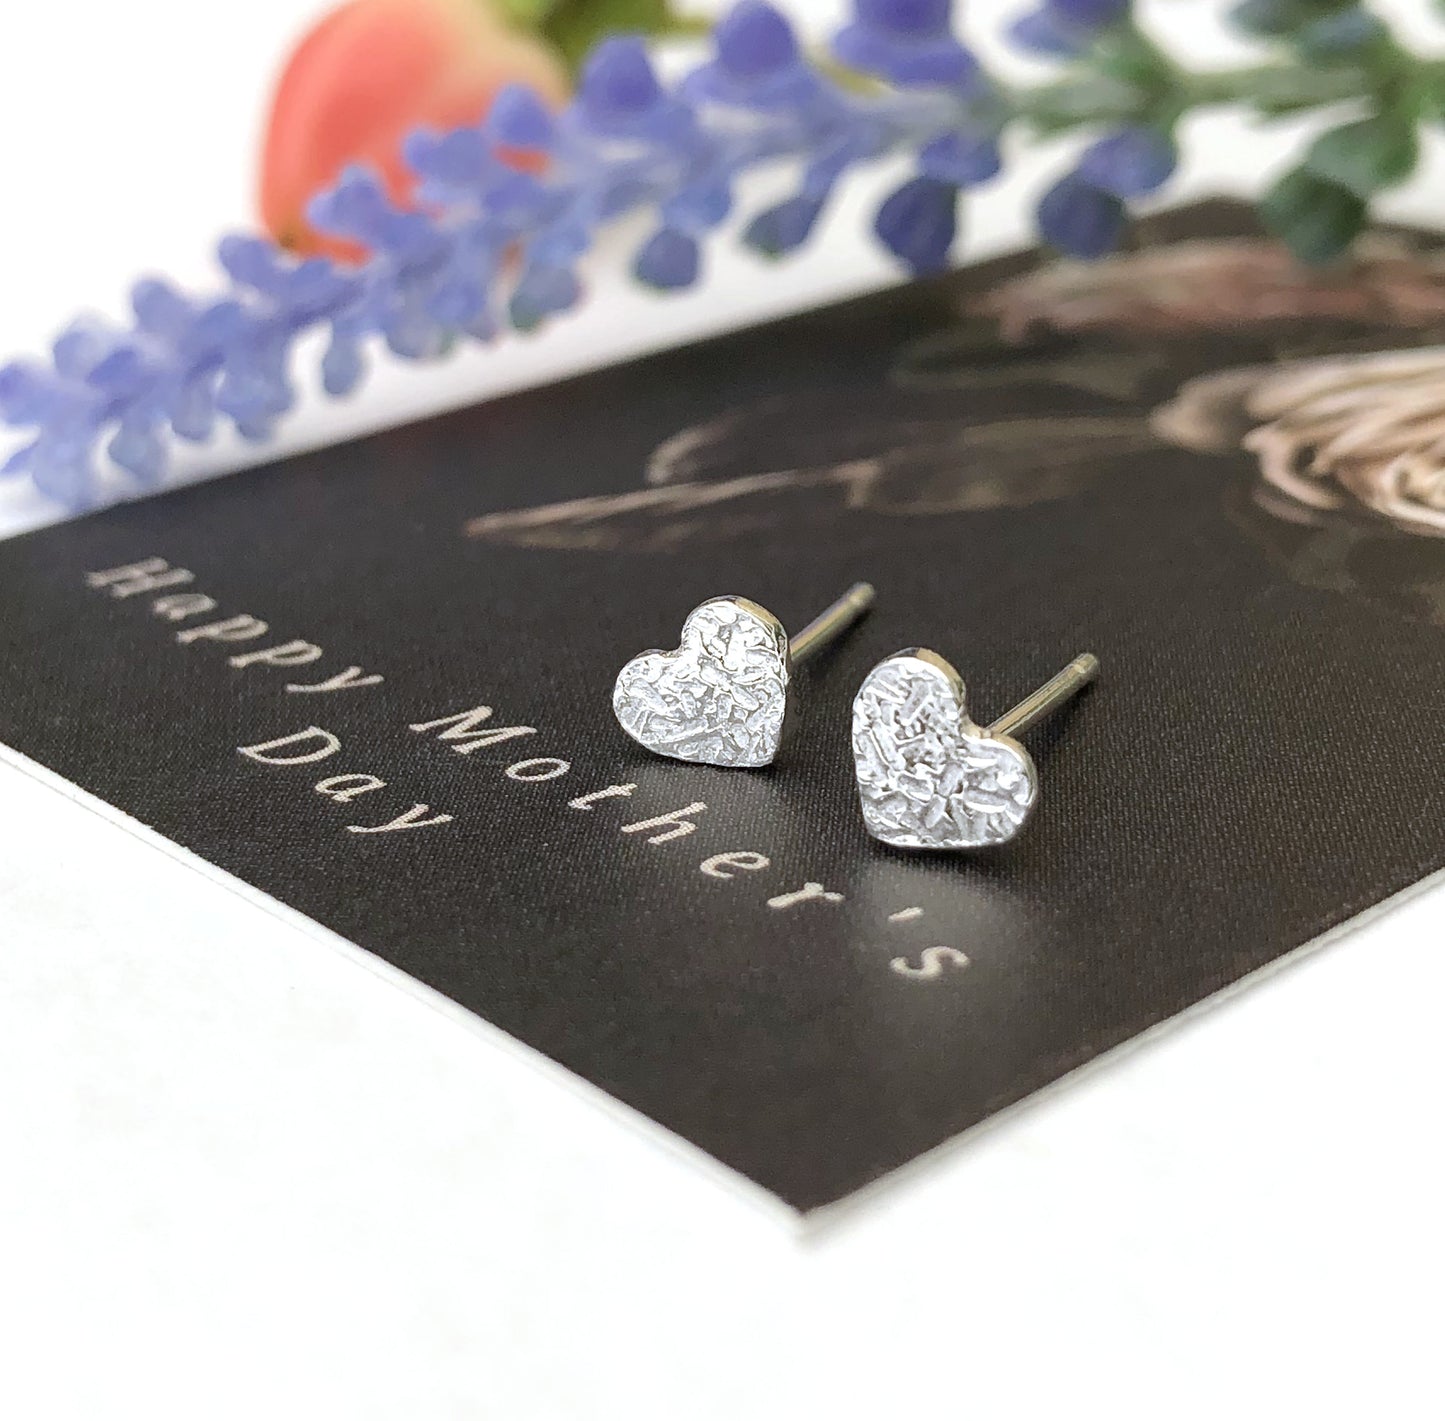 Dainty Sterling Silver Mini Heart Earrings, Small Textured Heart Studs